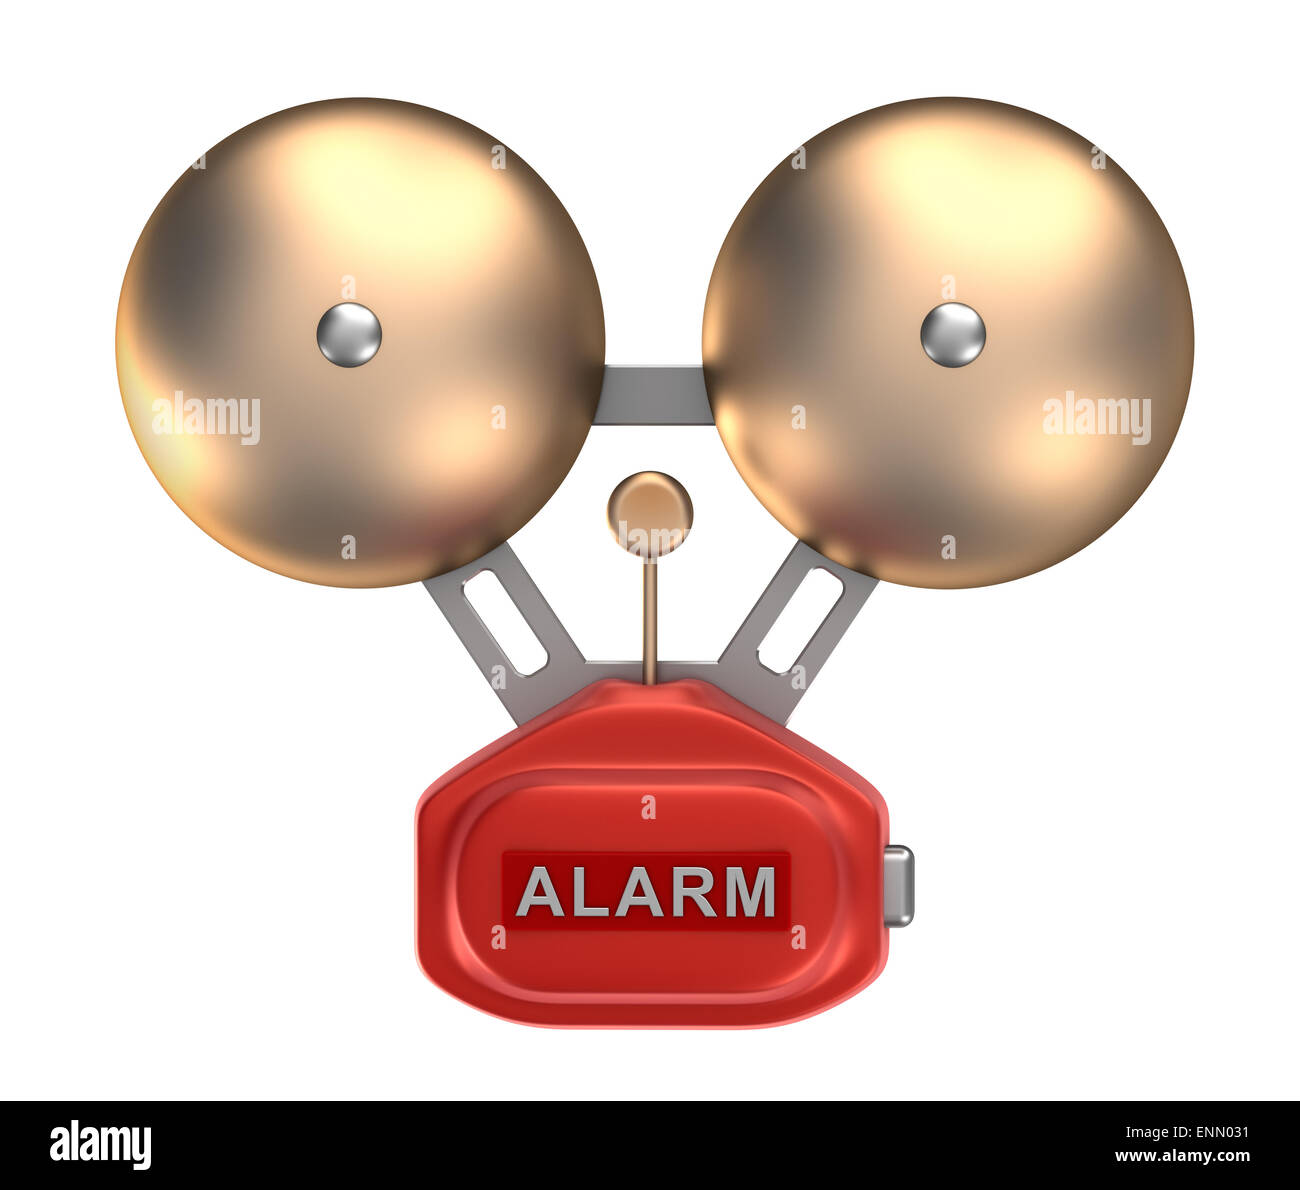 Alarm bell ringer. Isolated on white Stock Photo